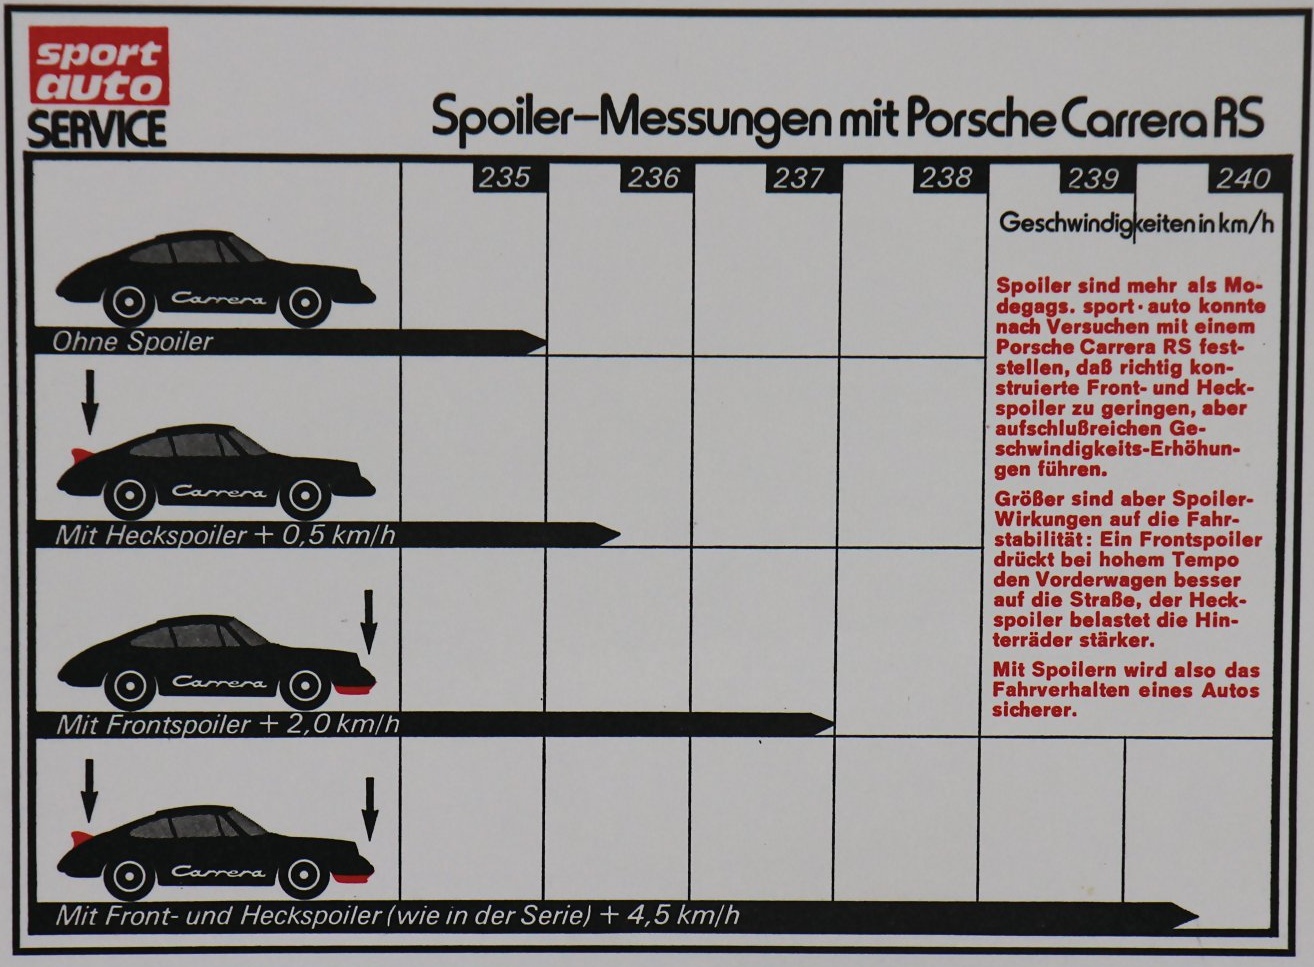 Porsche Carrera RS 2.7: Spoiler measurements